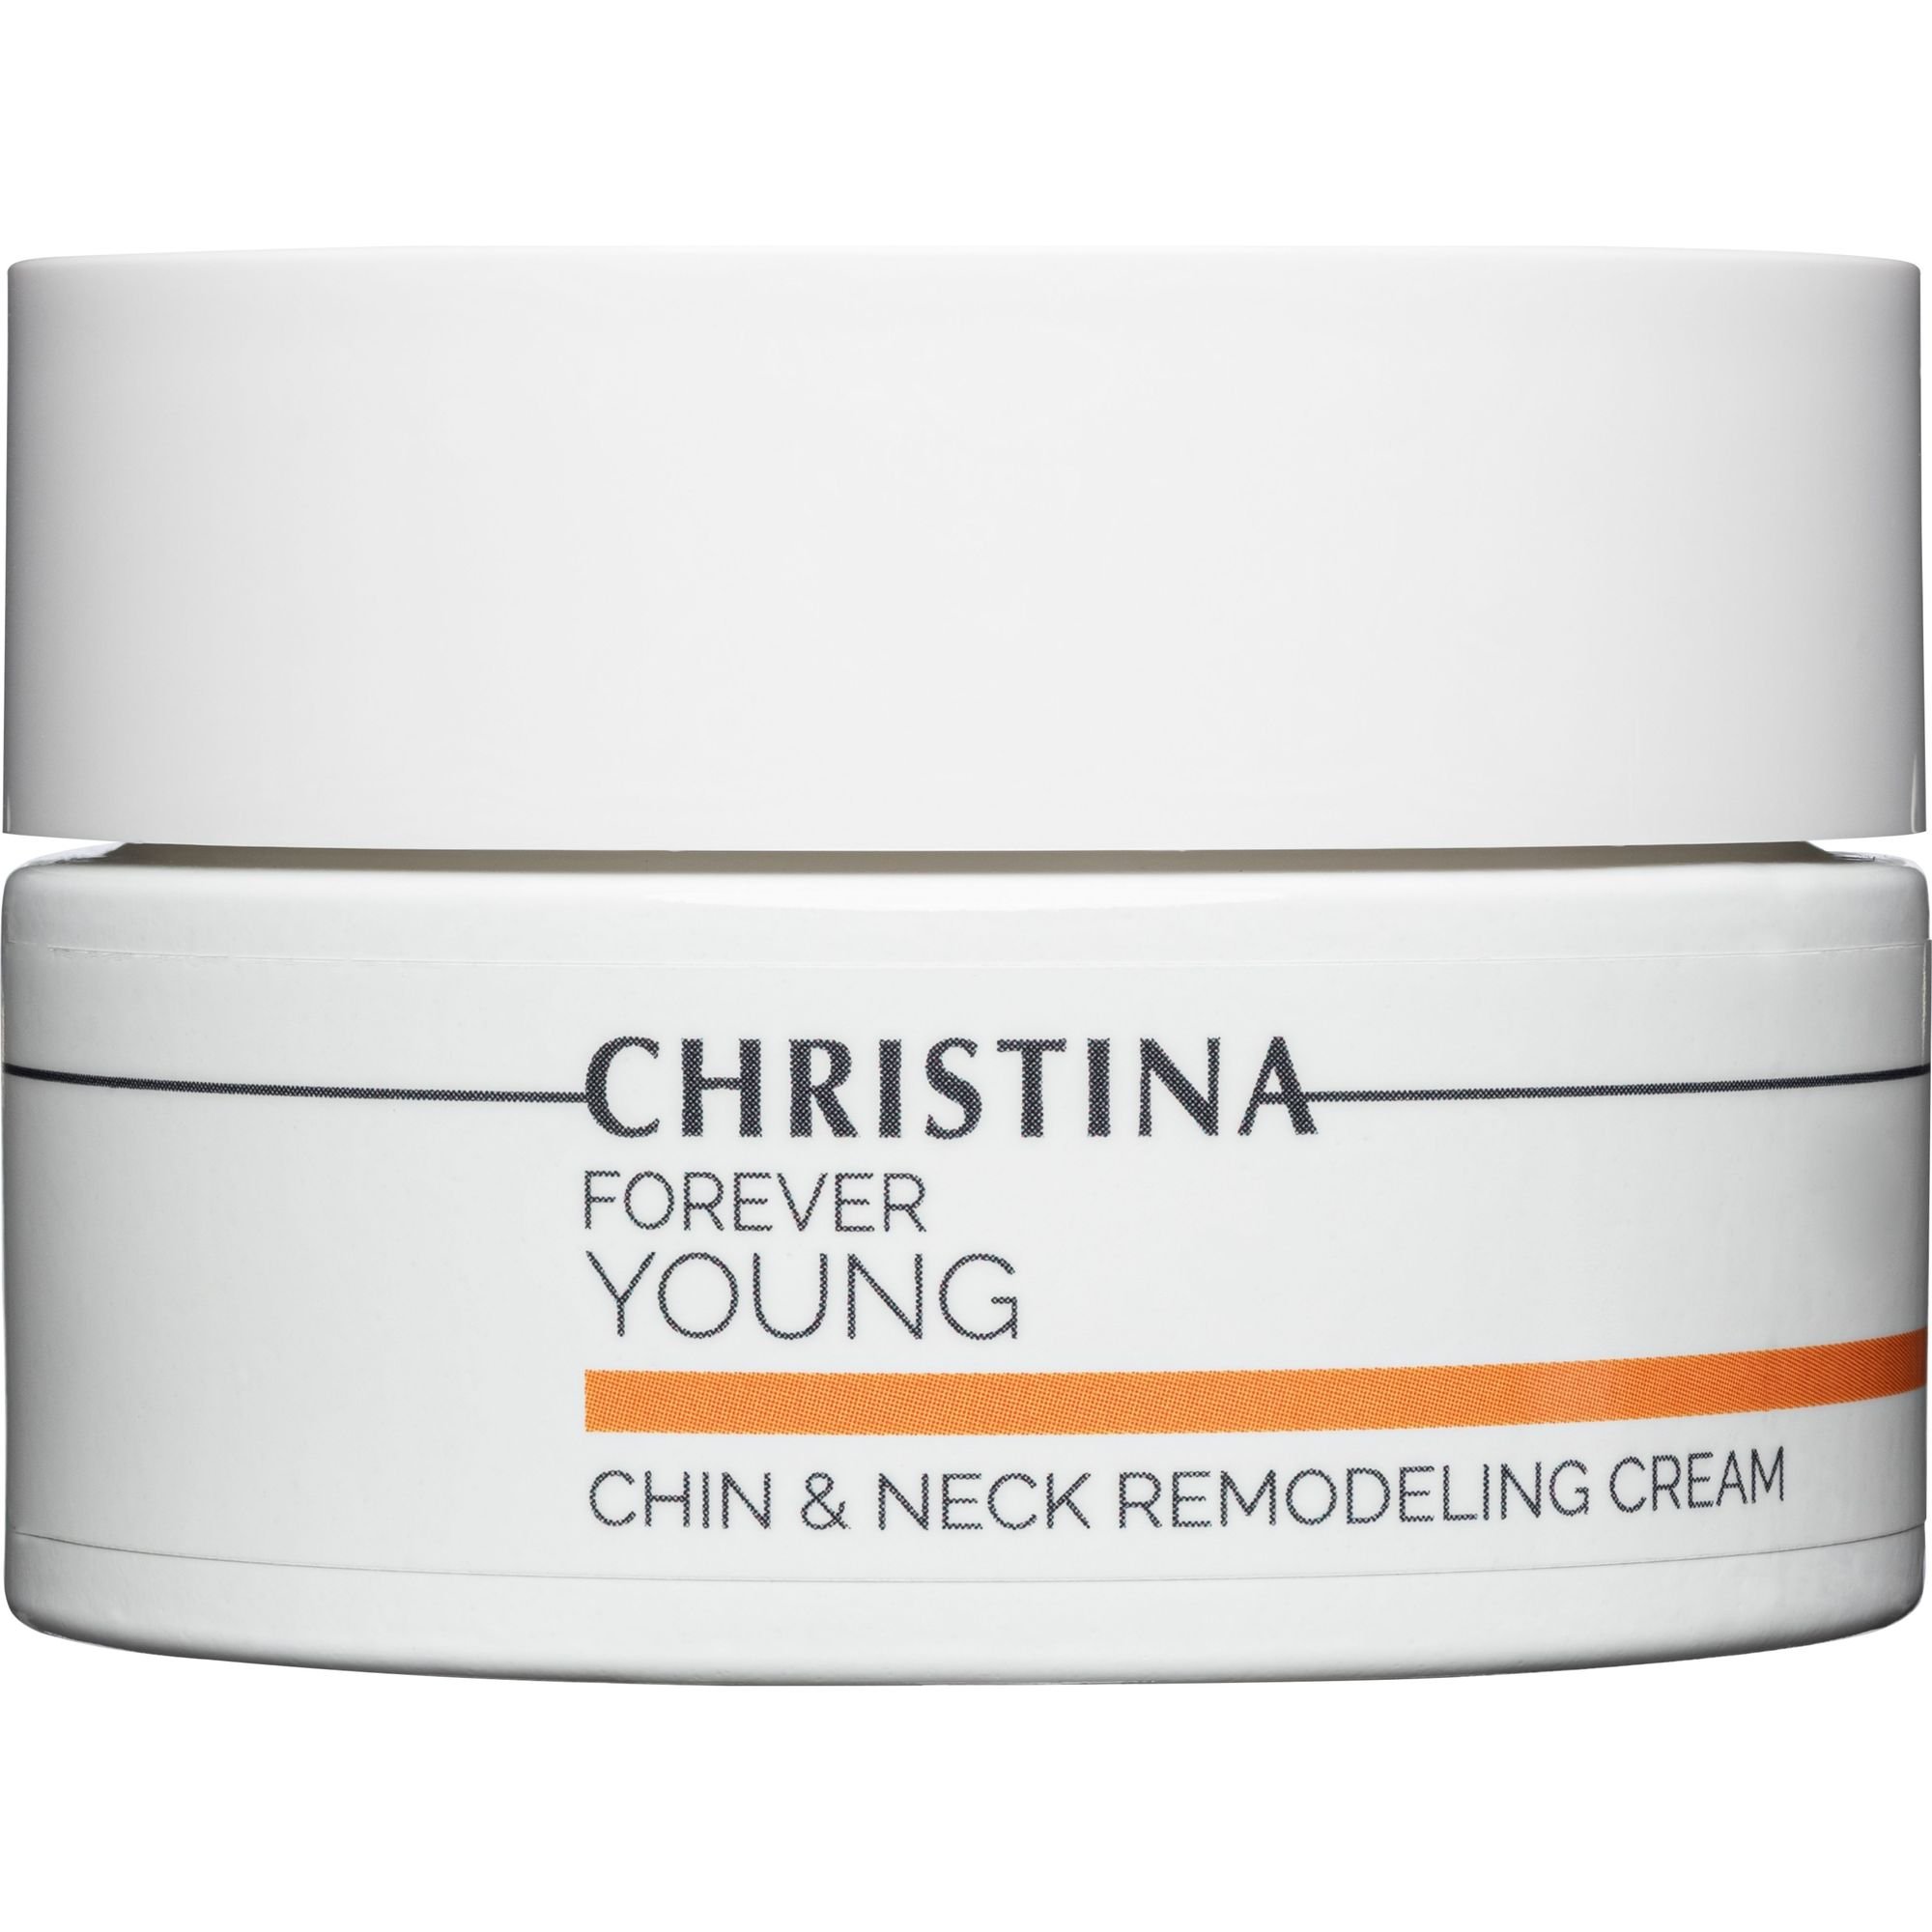 Ремоделирующий крем Christina Forever Young Chin & Neck Remodeling Cream 50 мл - фото 1